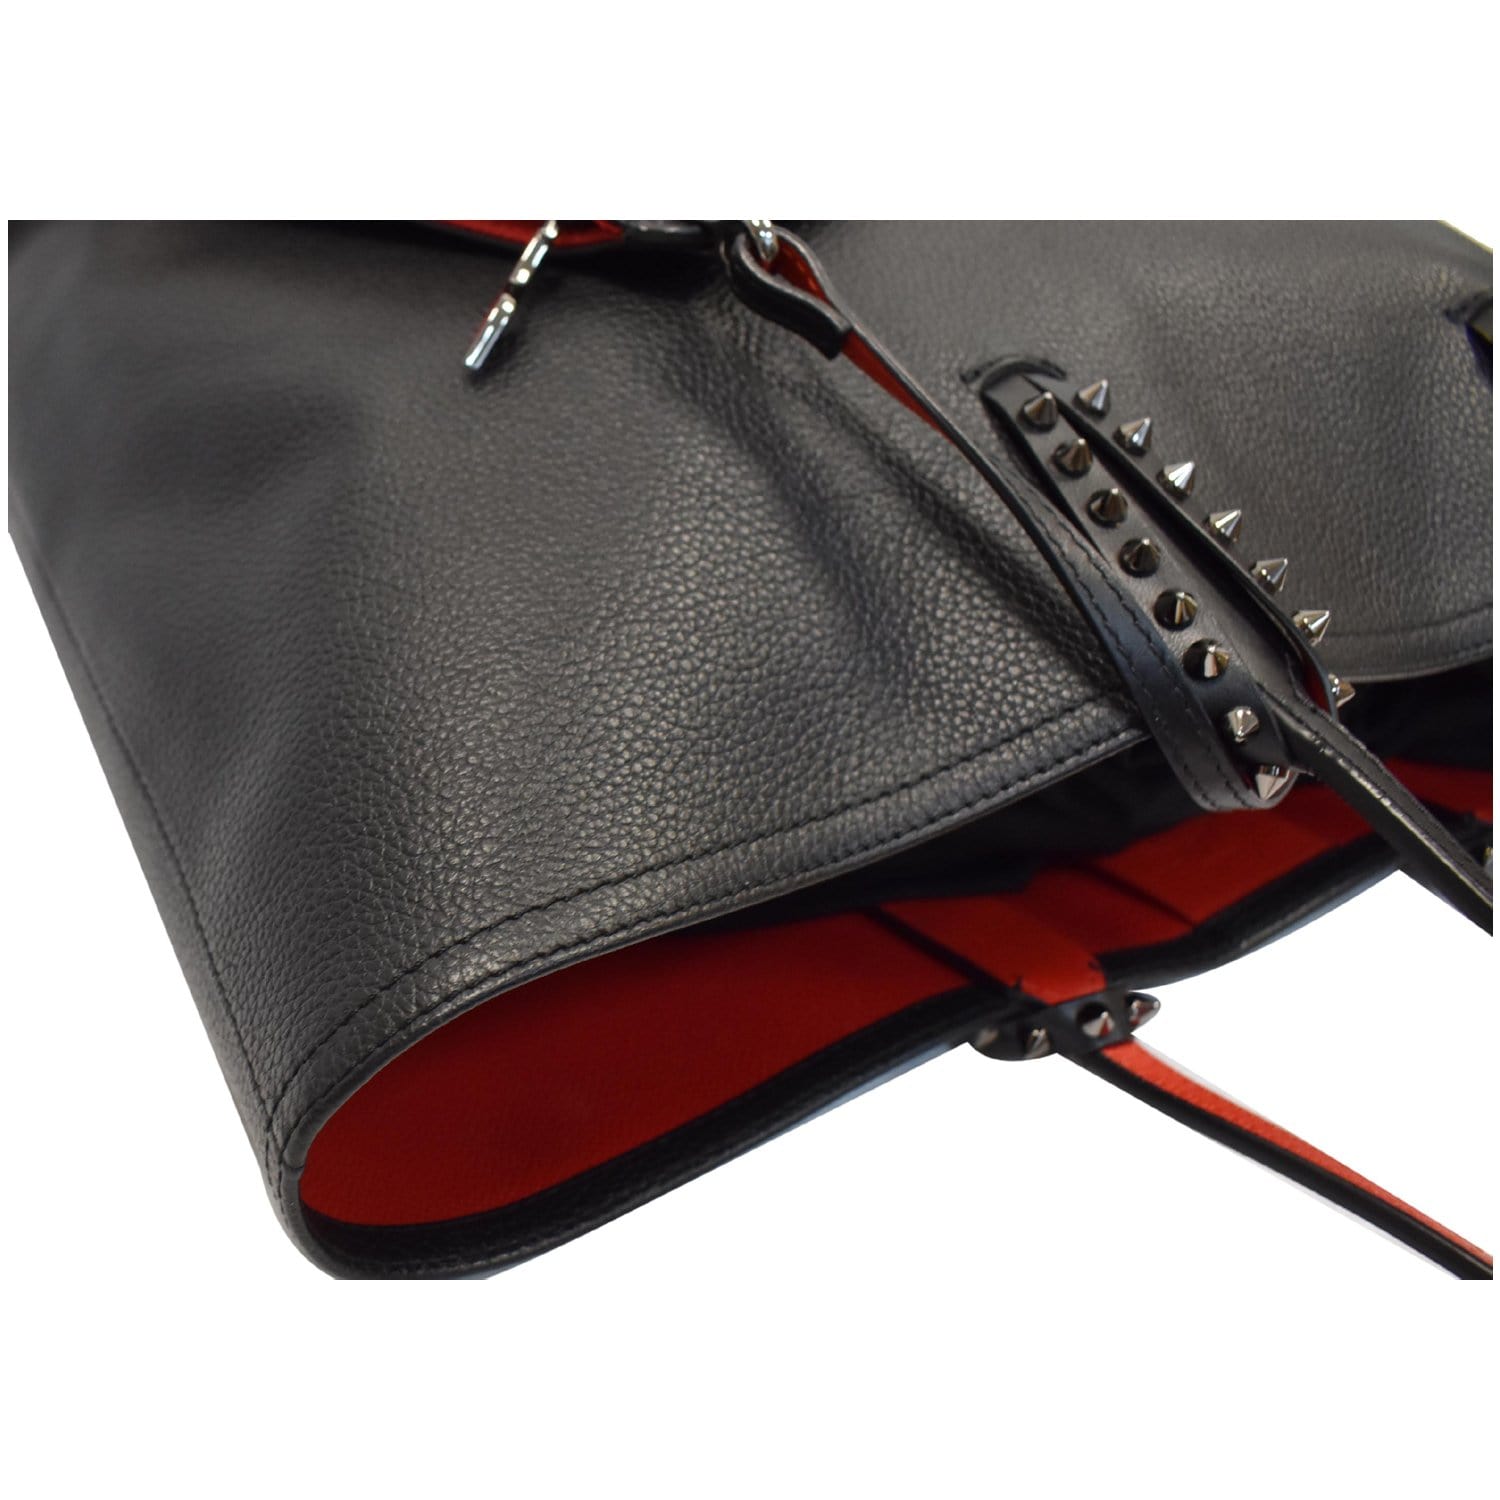 Christian Louboutin Leather Cabata Tote - Black Totes, Handbags - CHT336201